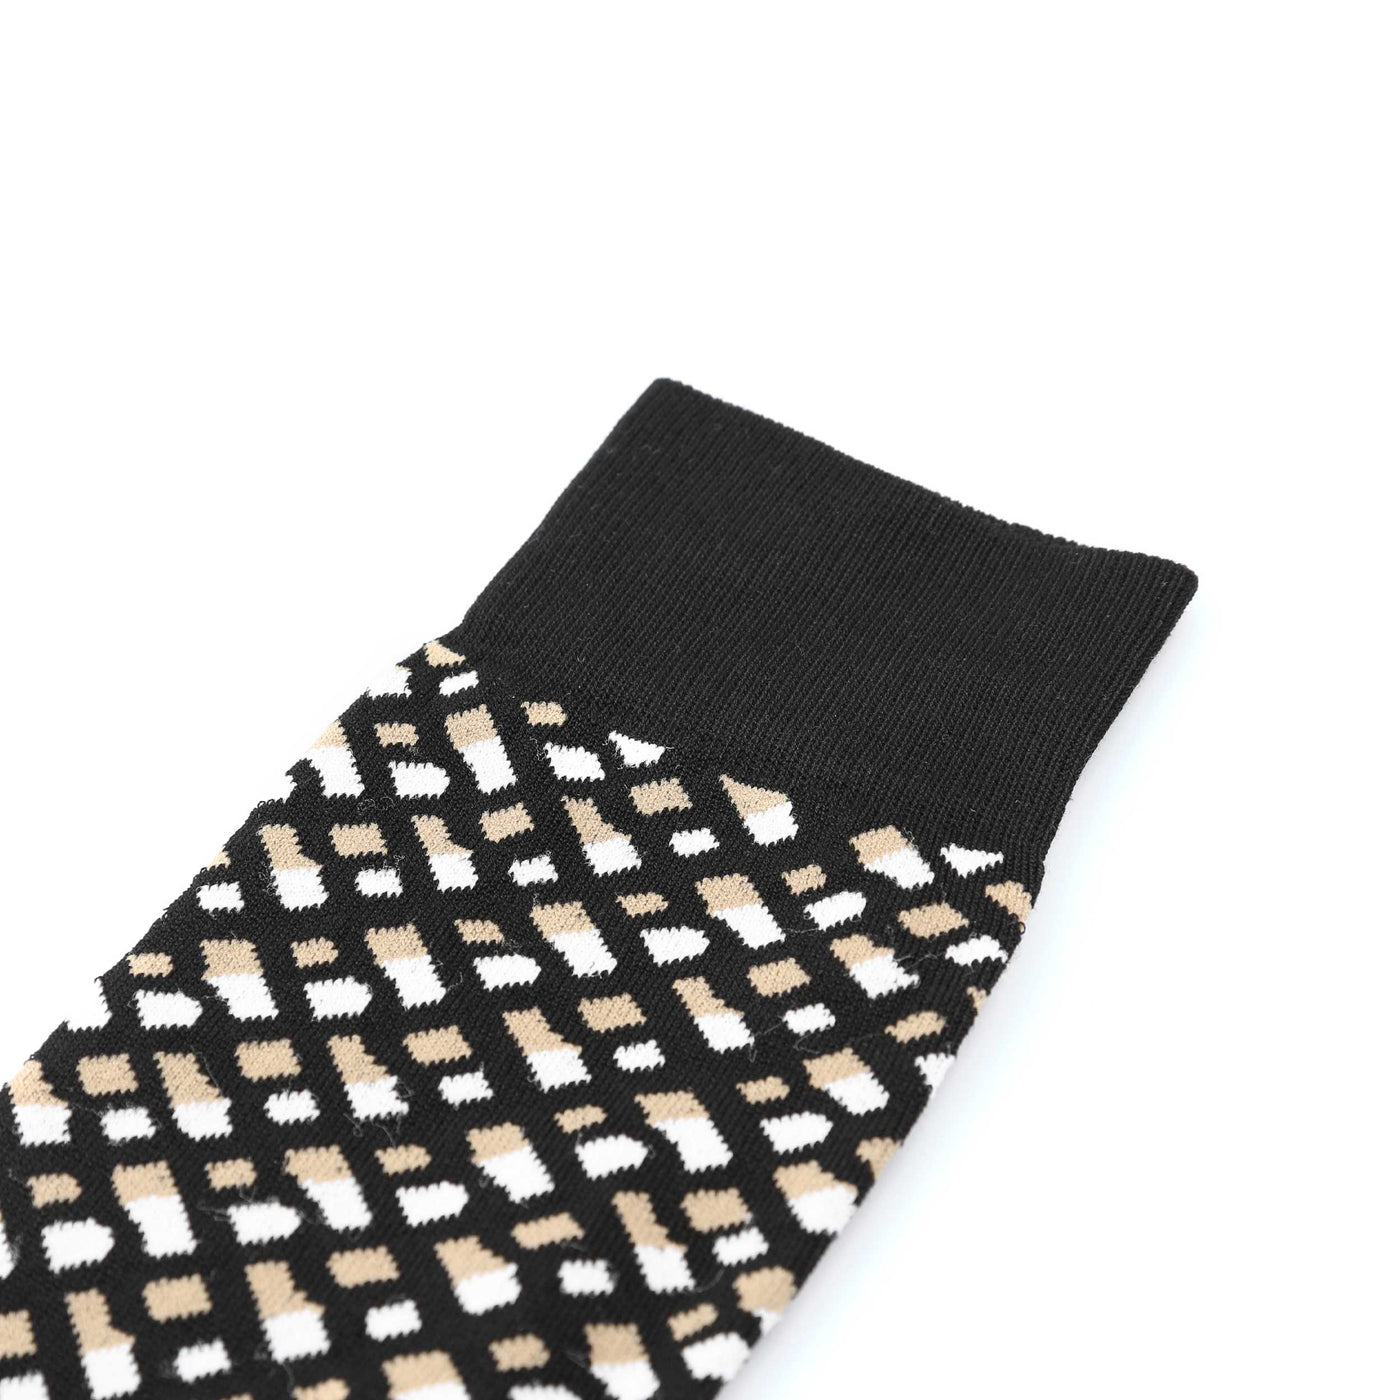 BOSS RS Monogram MC Sock in Black Cuff